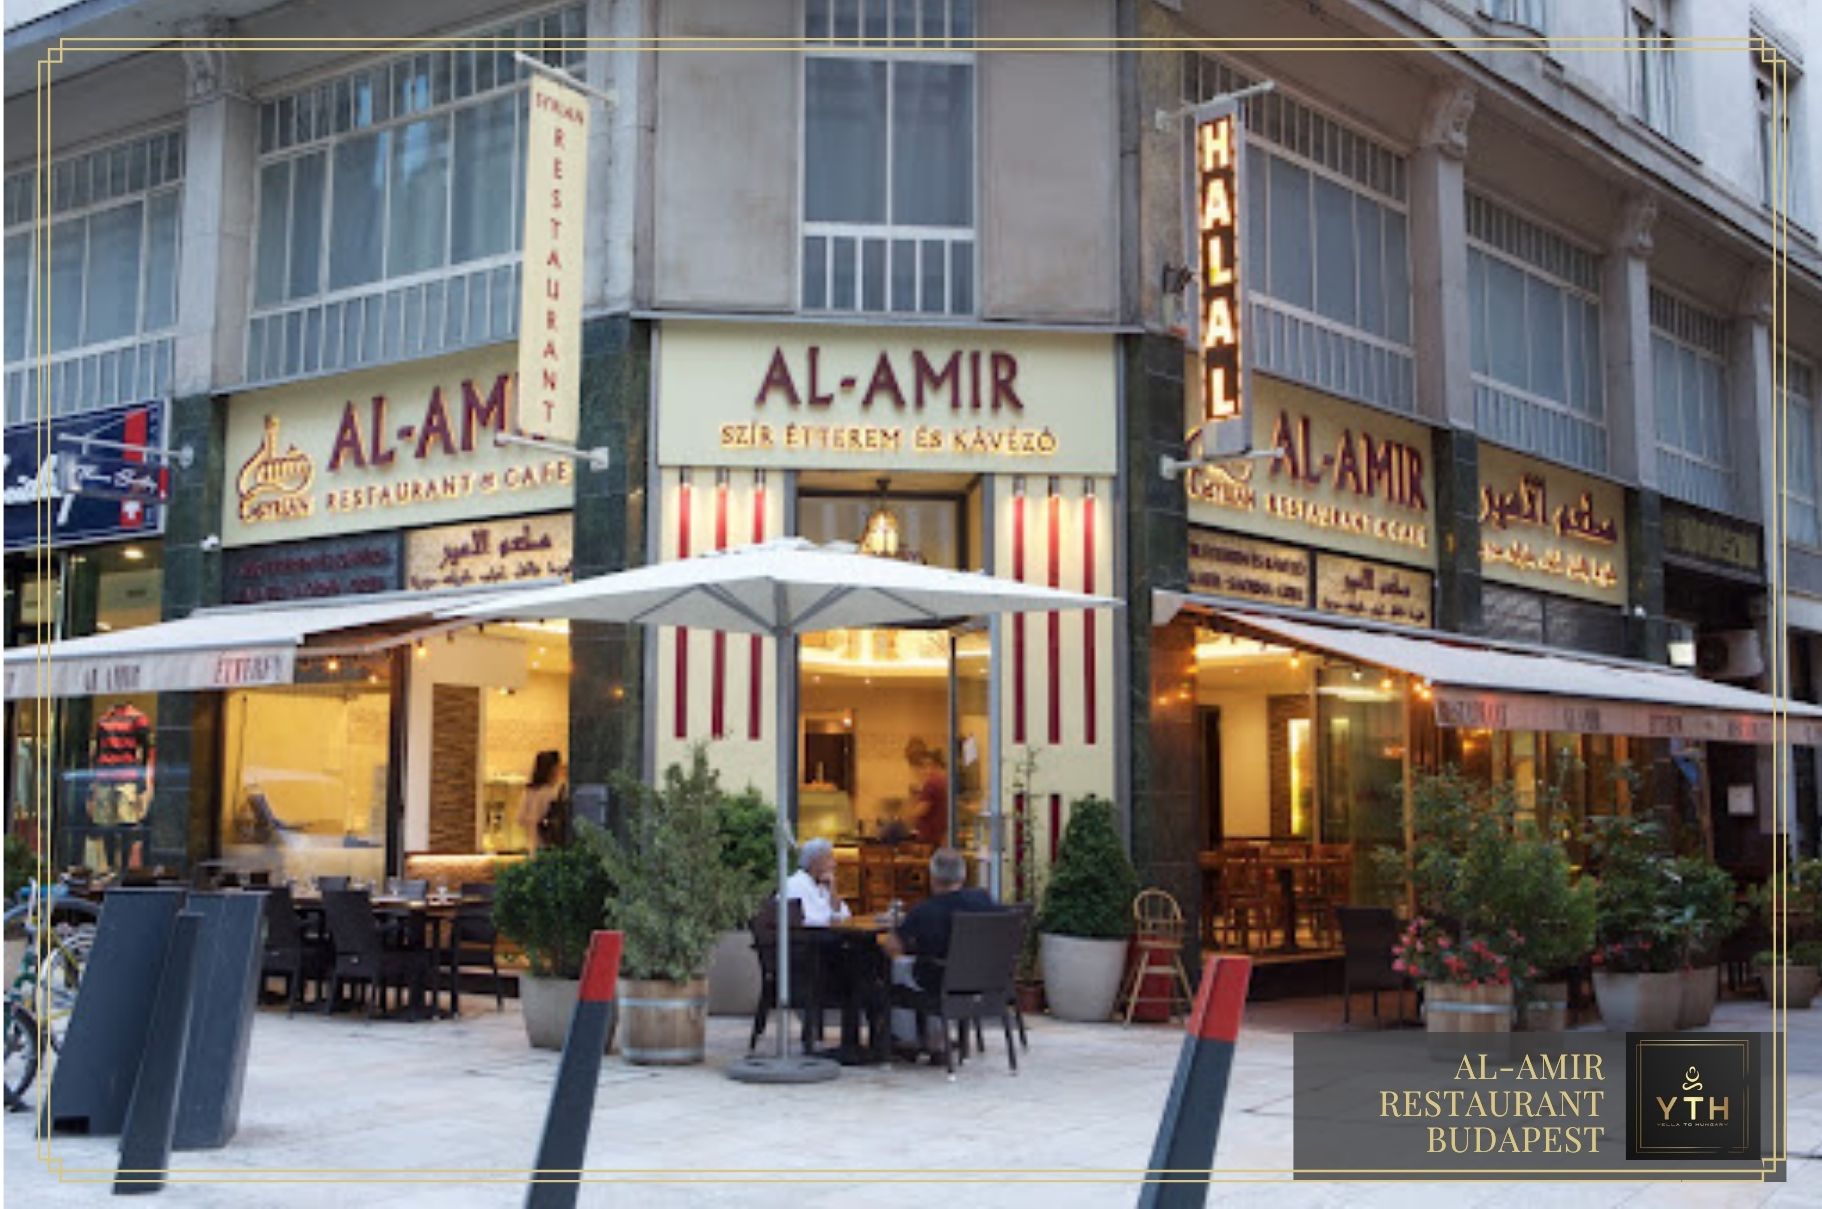 Al-Amir restaurant in Budapest, Hungary